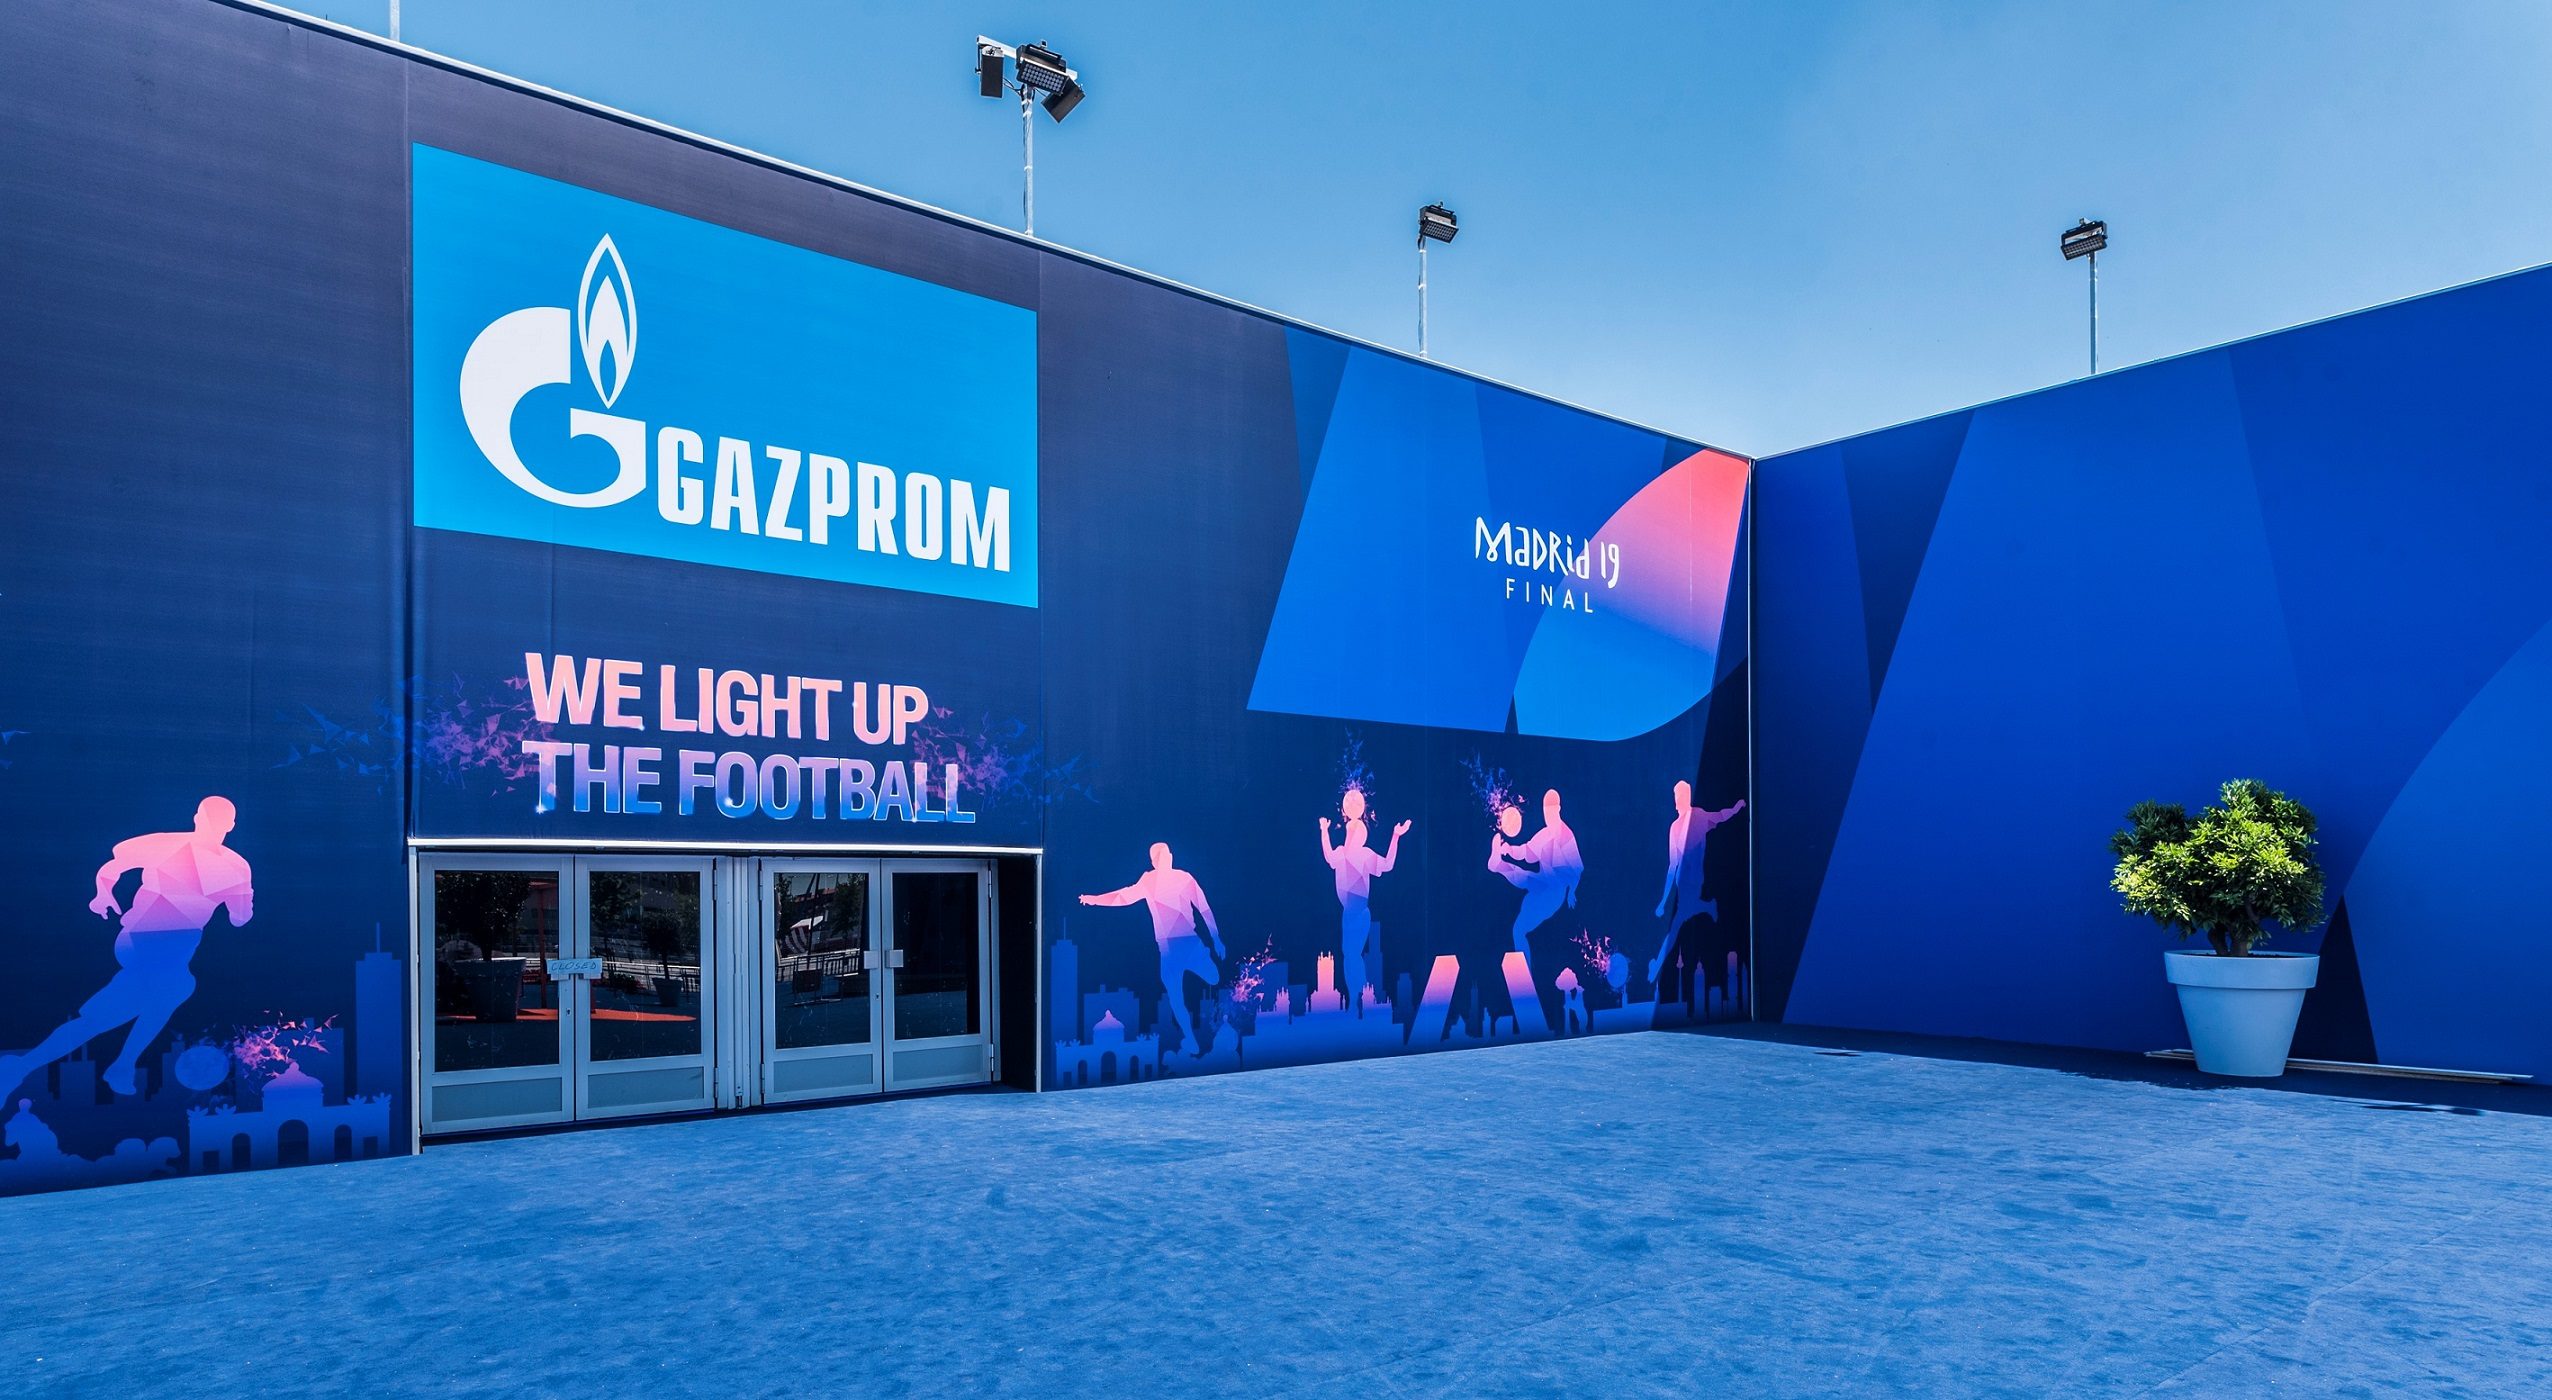 Gazprom Tent Stand Champios League Final Madrid 2019